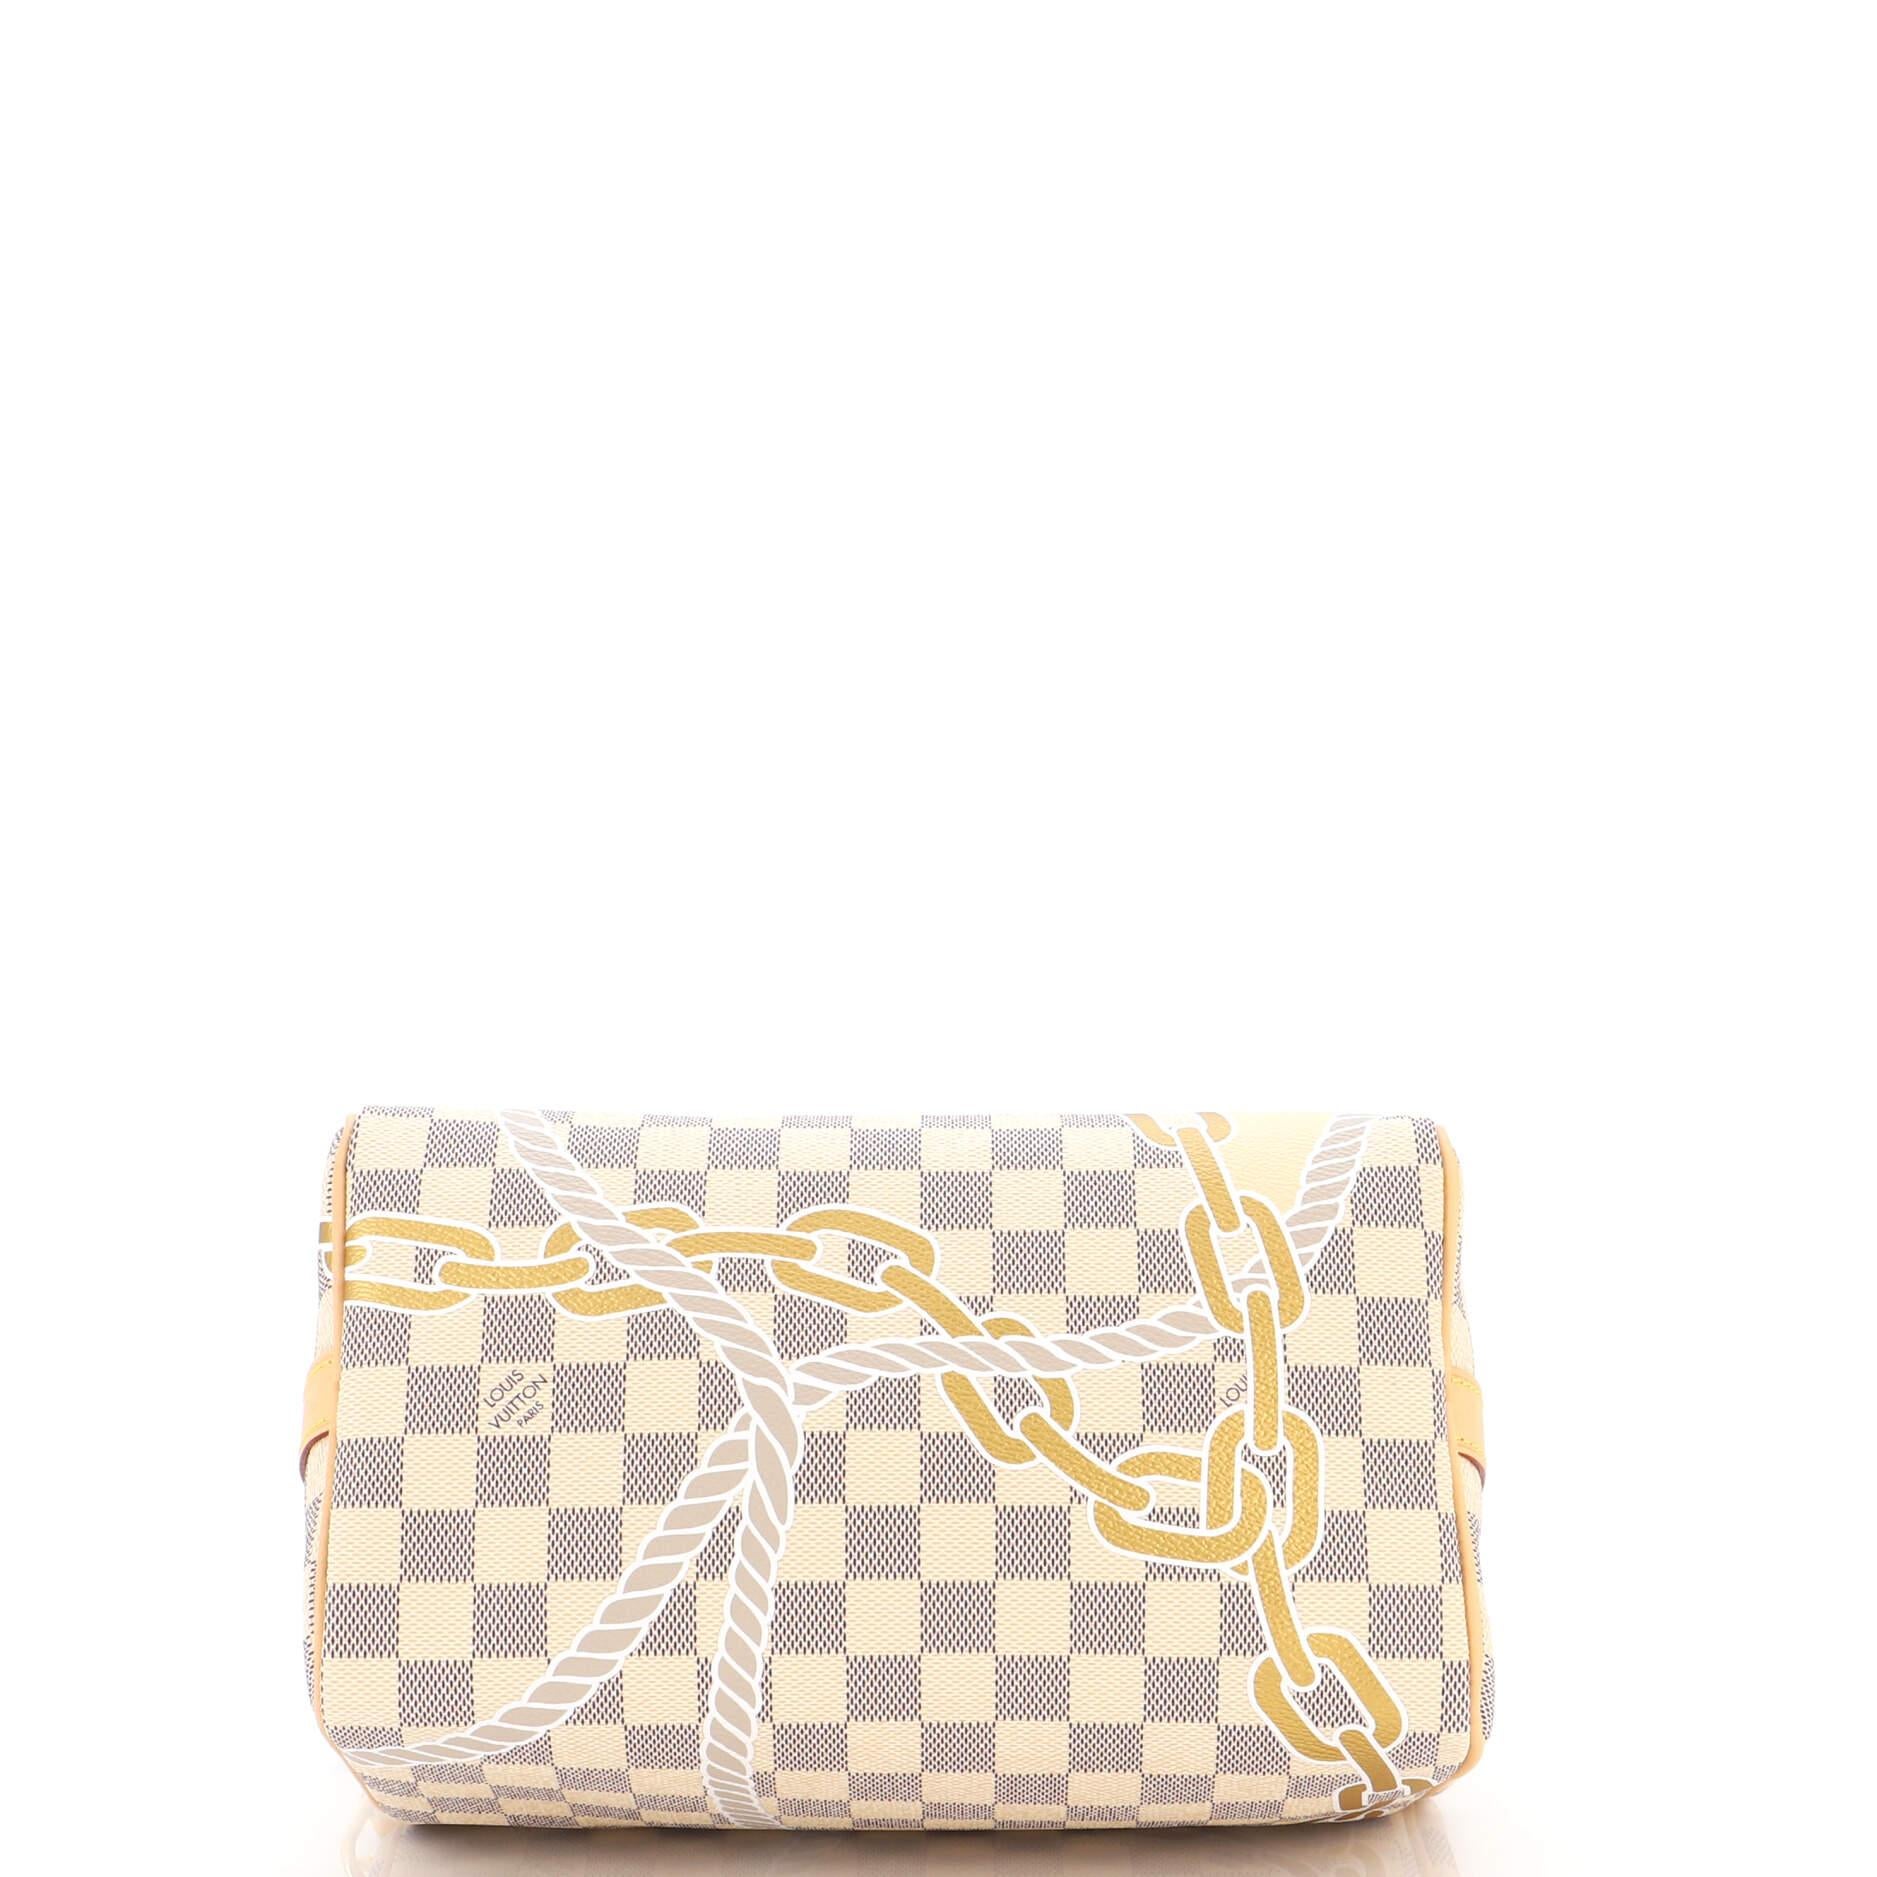 Women's or Men's Louis Vuitton Speedy Bandouliere Bag Limited Edition Nautical Damier 25